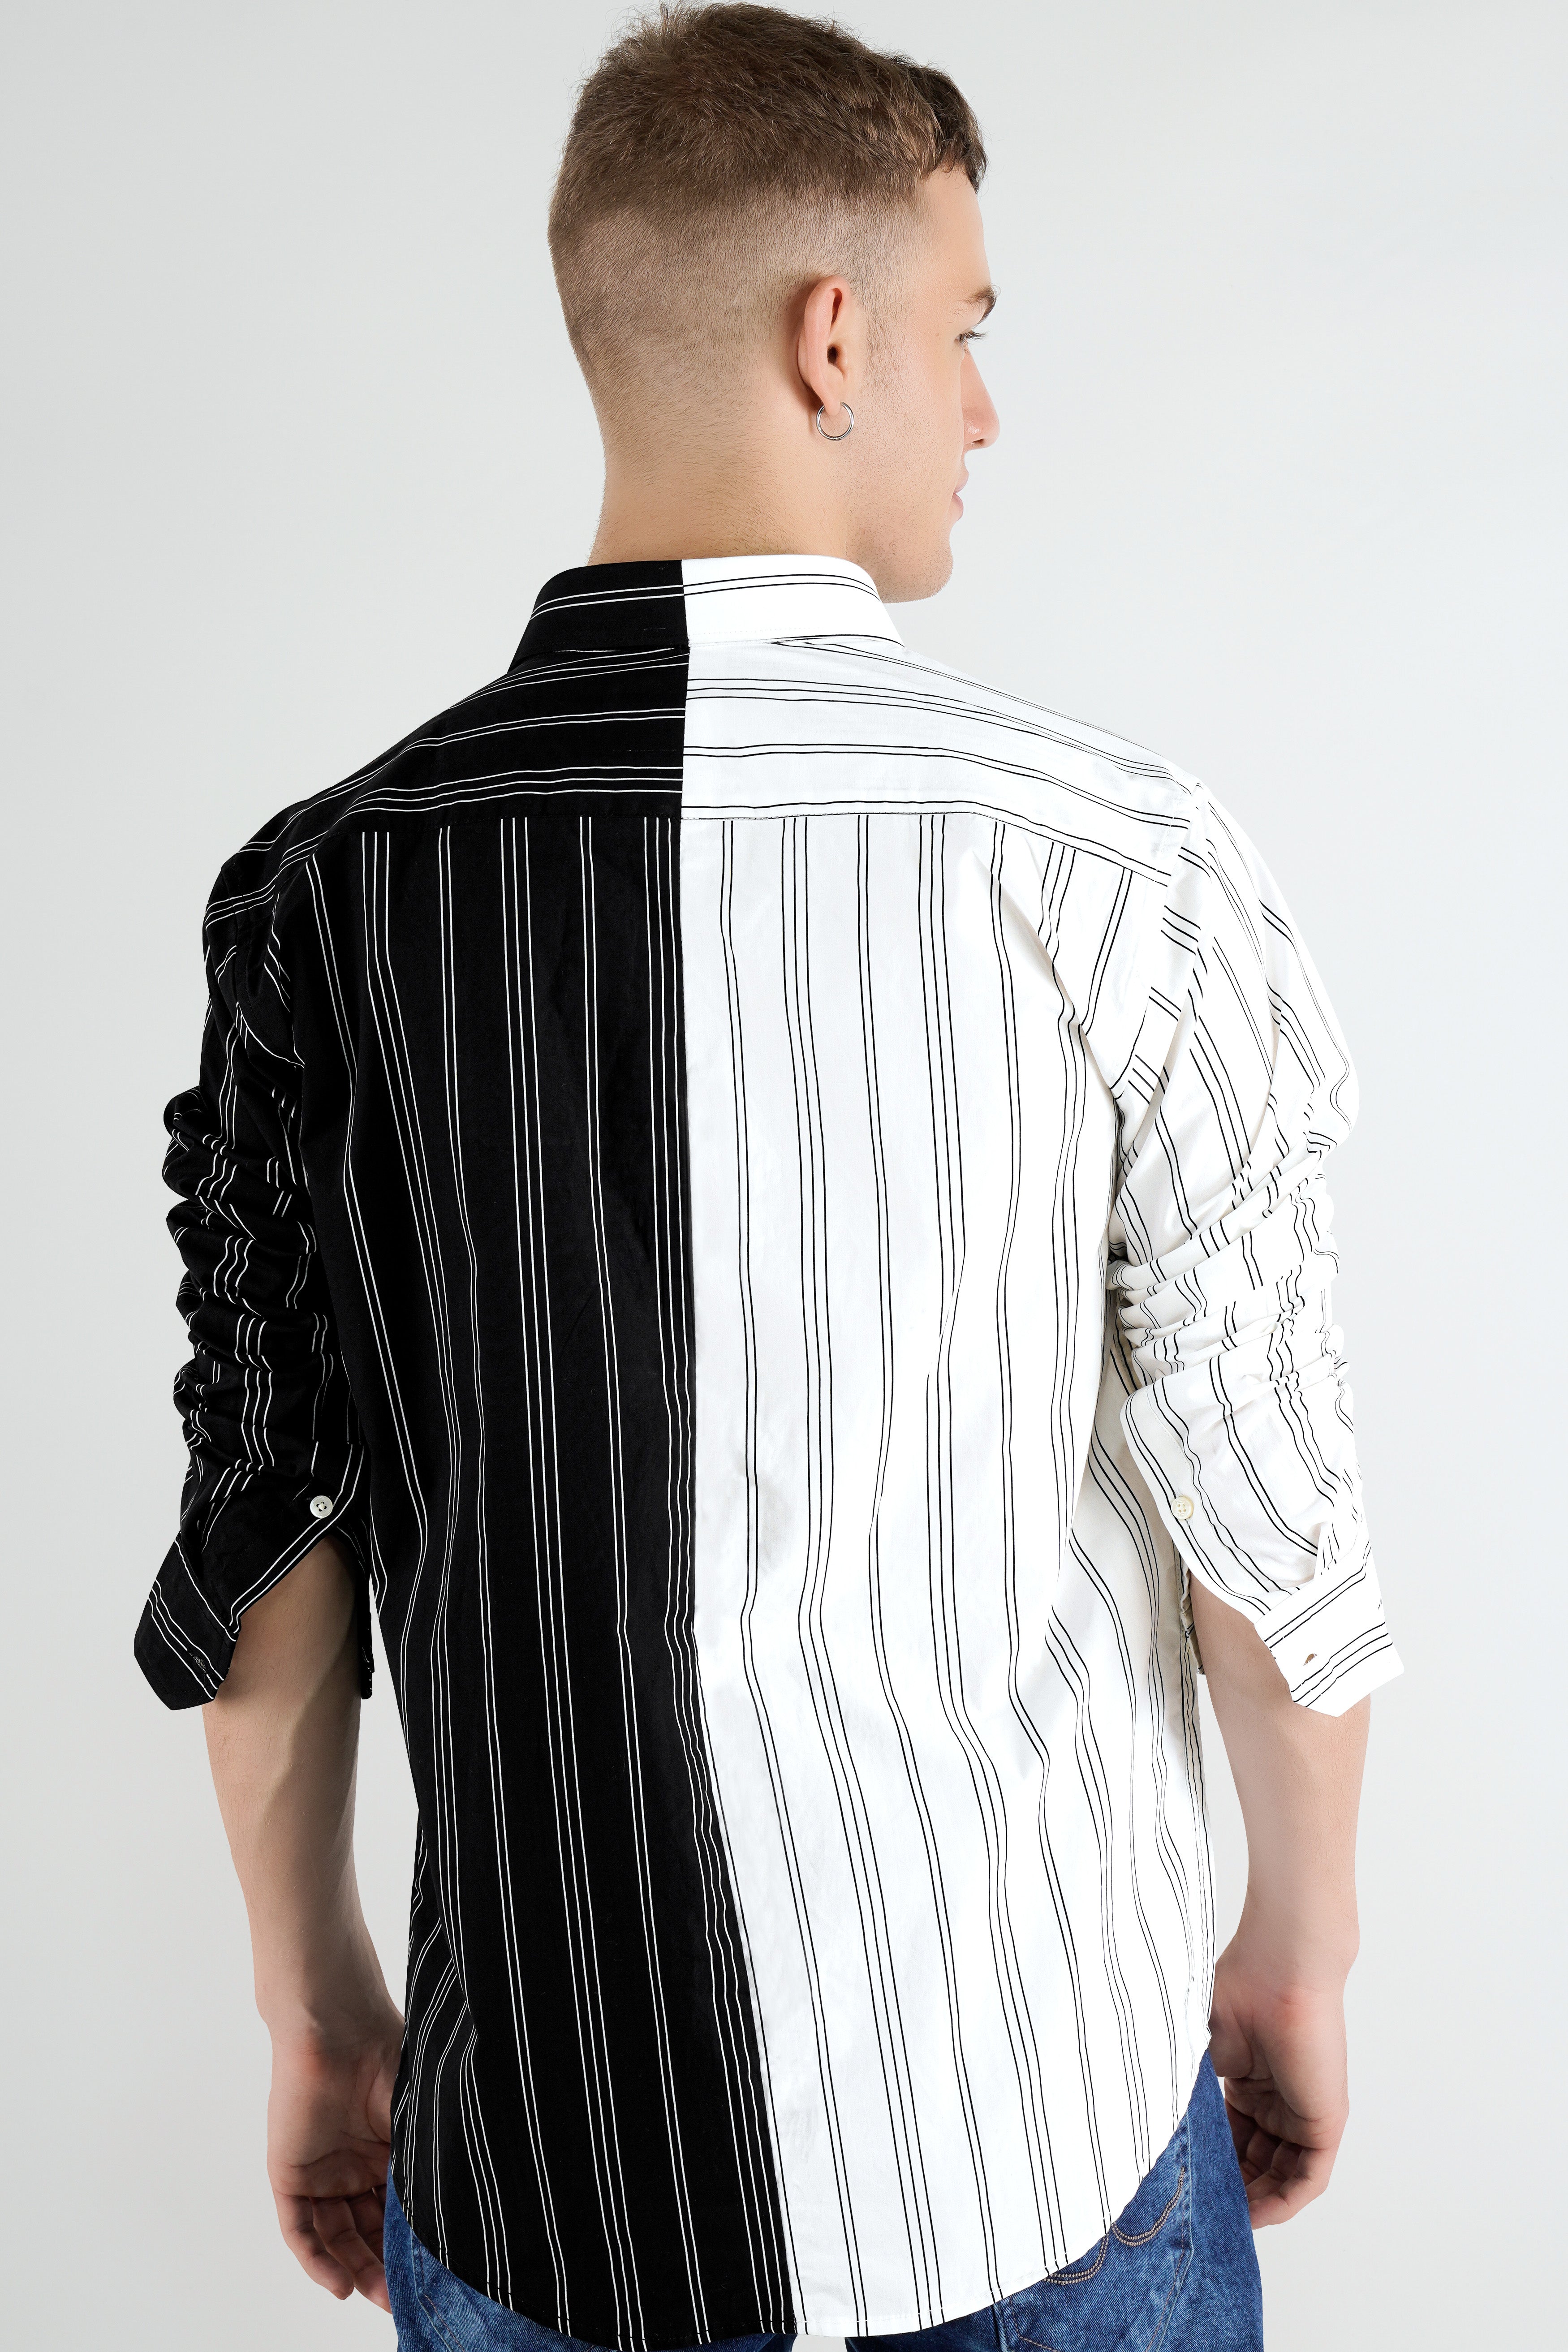 Half White With Half Black Pin Striped Twill Premium Cotton Designer Shirt